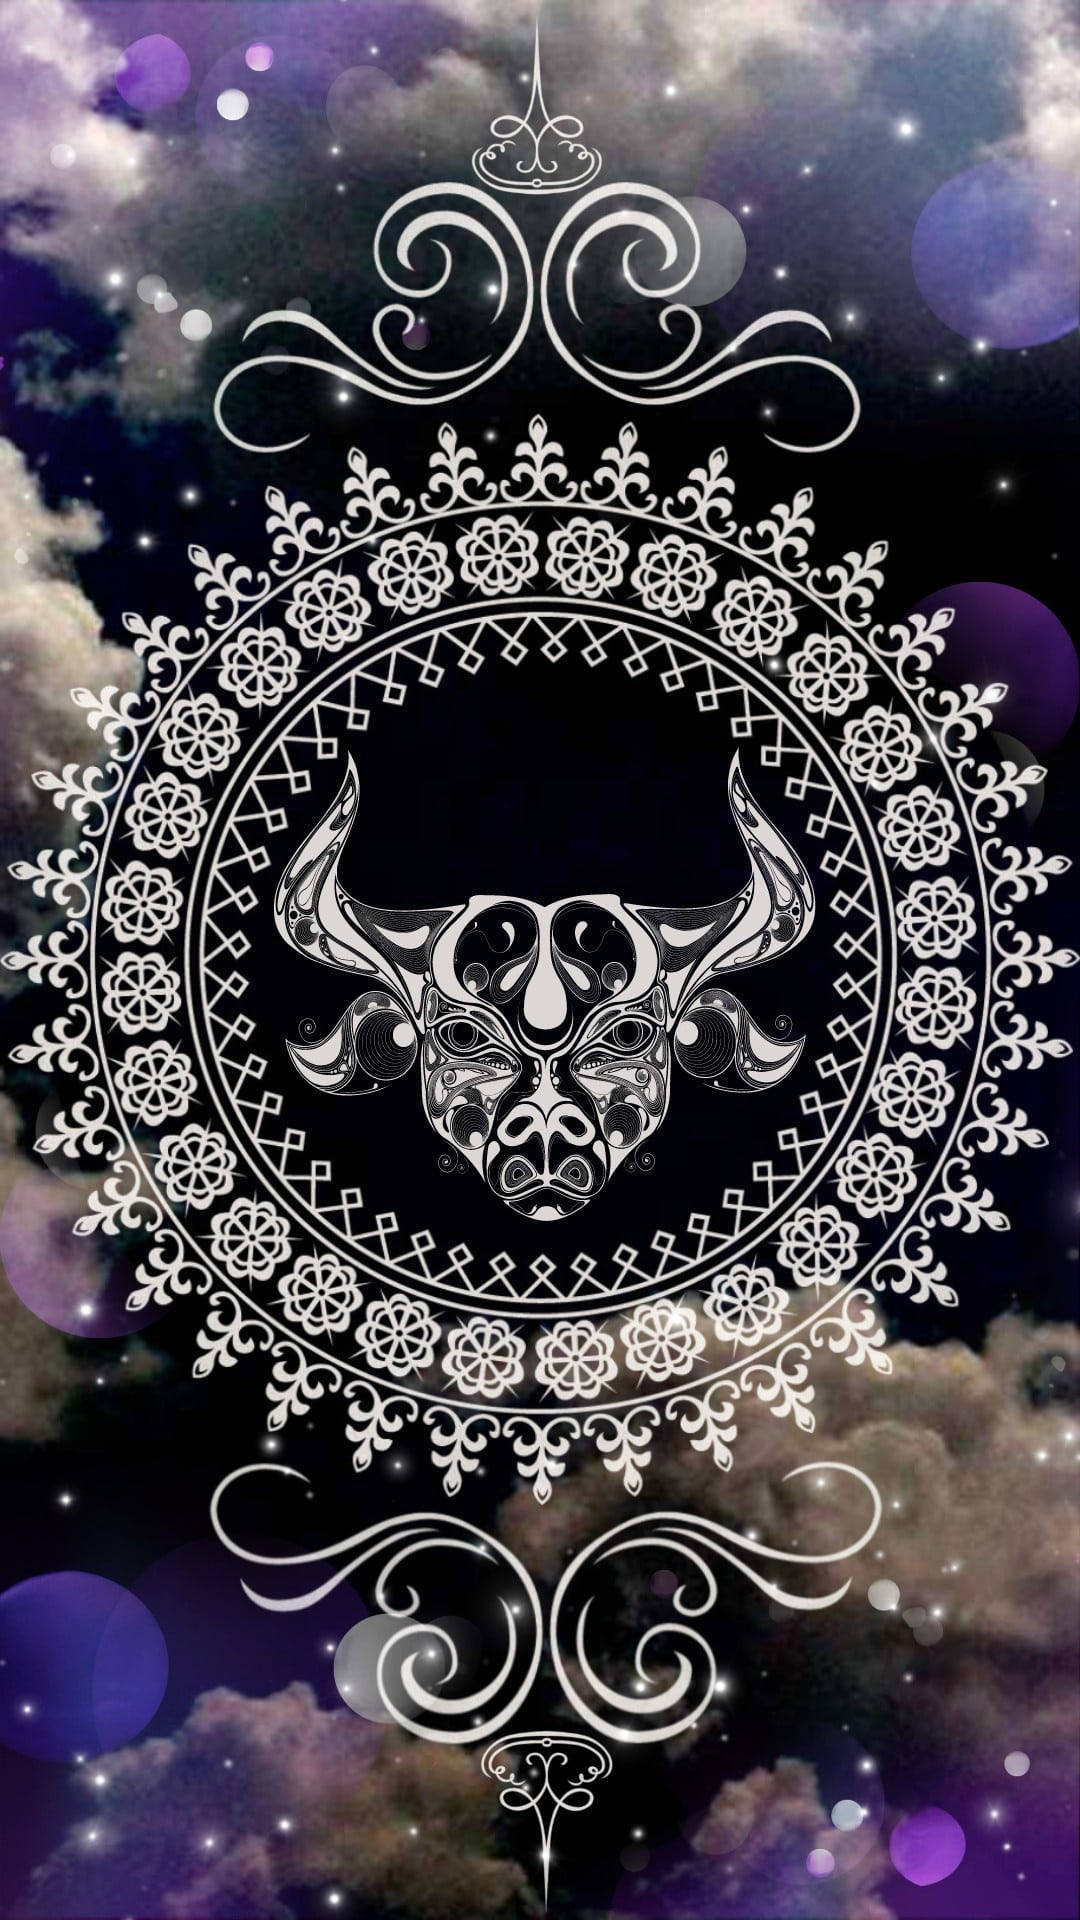 Free Taurus Zodiac Wallpaper Downloads, Taurus Zodiac Wallpaper for FREE